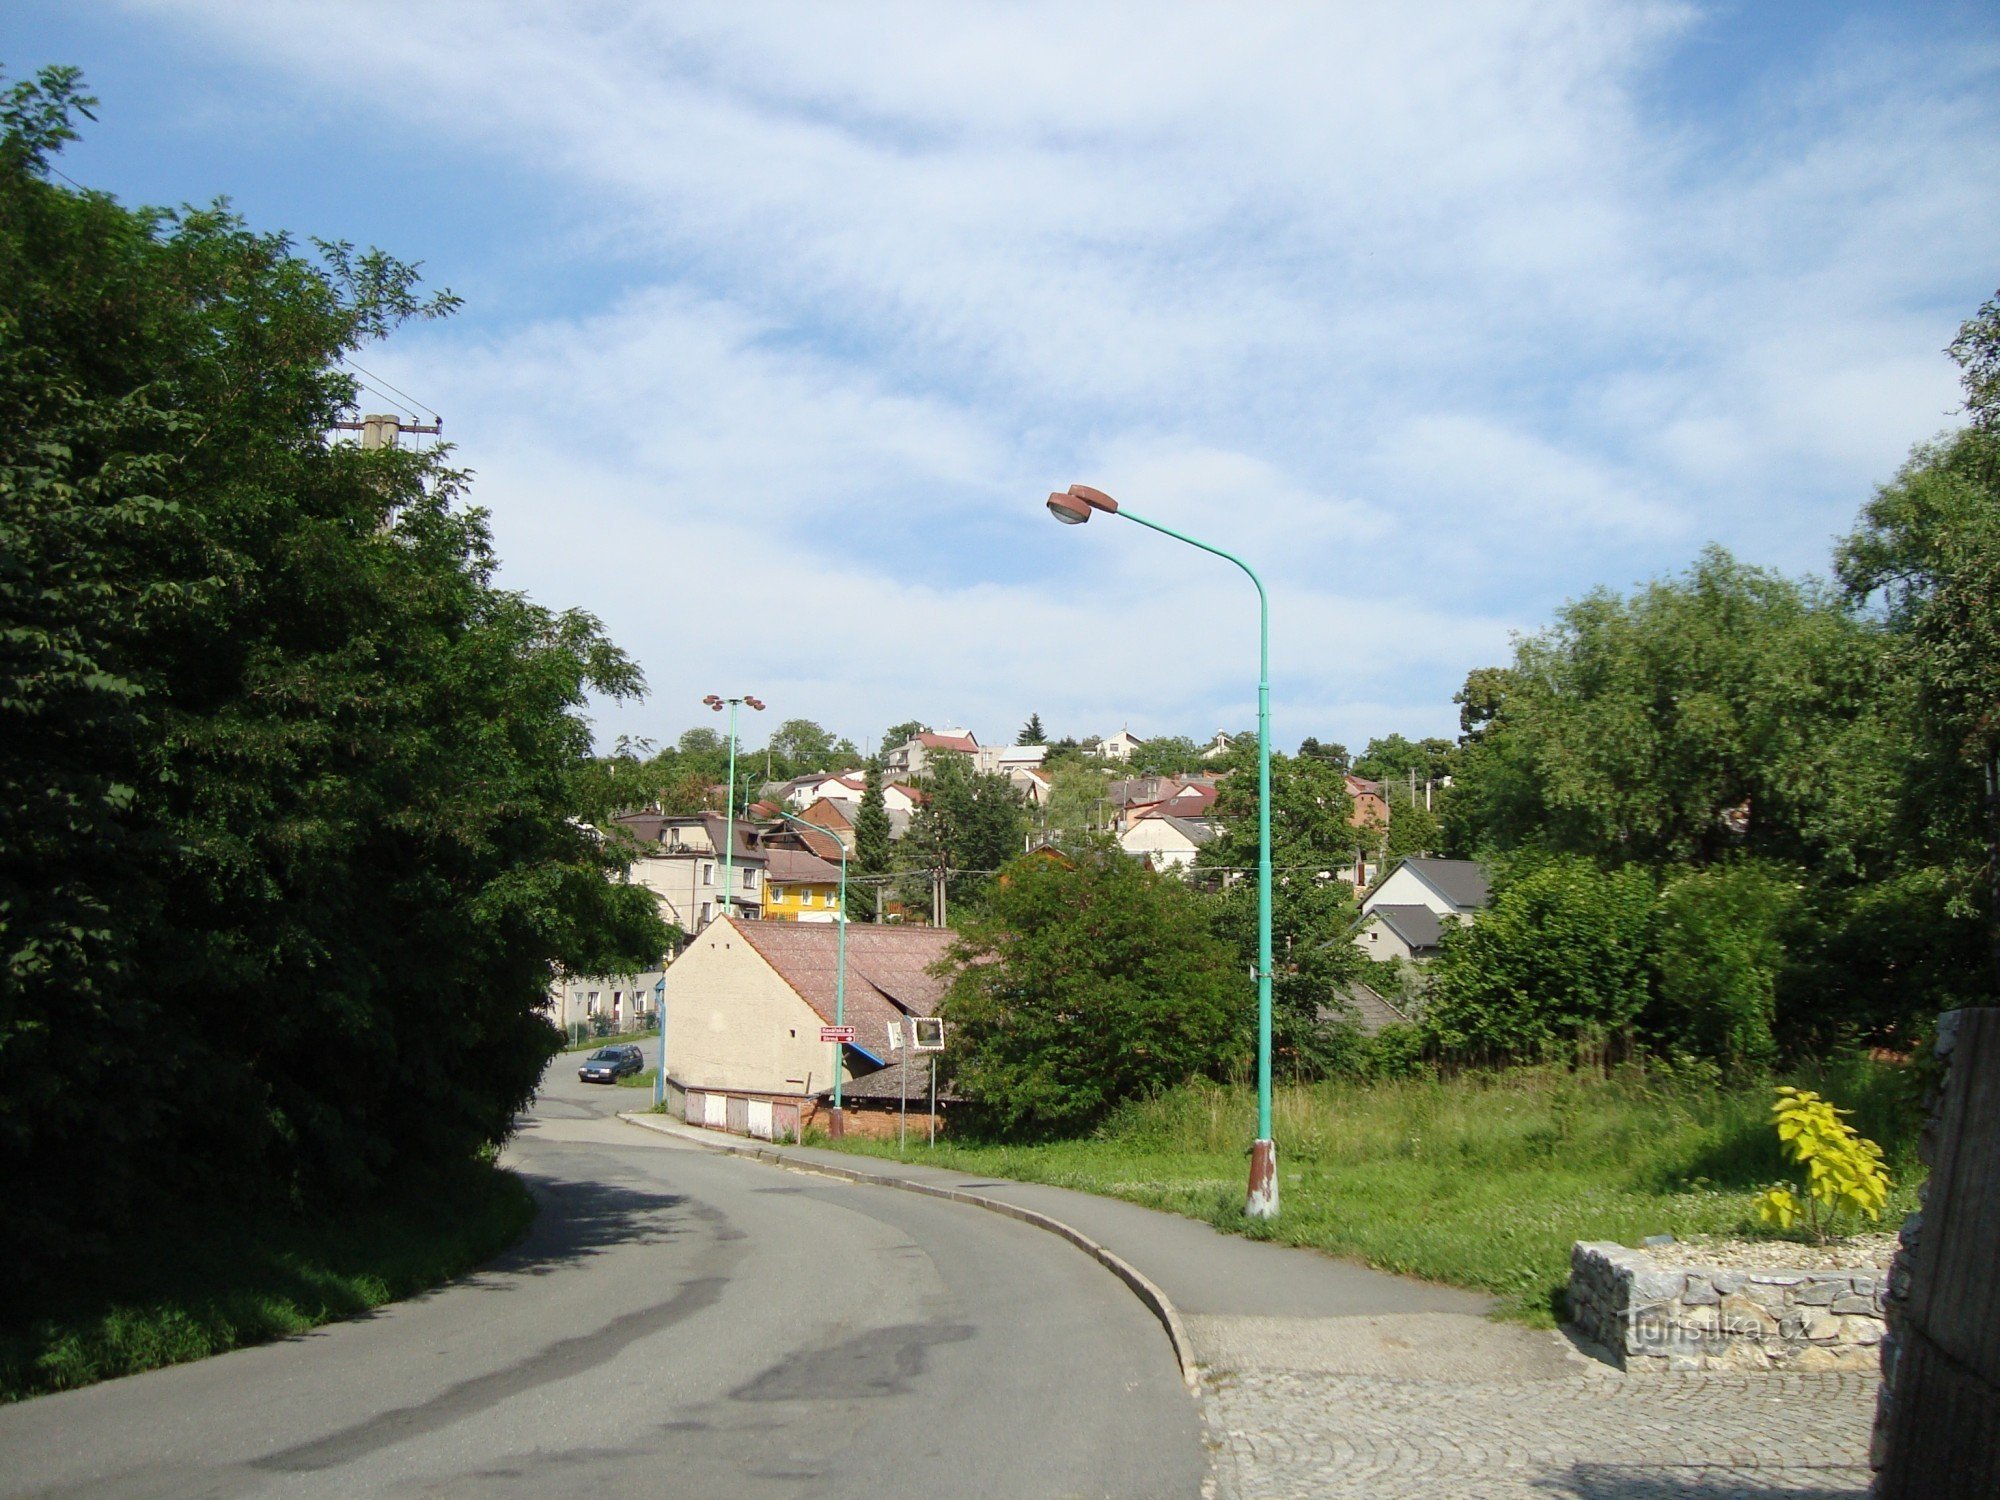 Ulica Lošov-Svolinského, odcinek pod tamą w dolinie potoku Lošovského-fot.: Ulrych Mir.